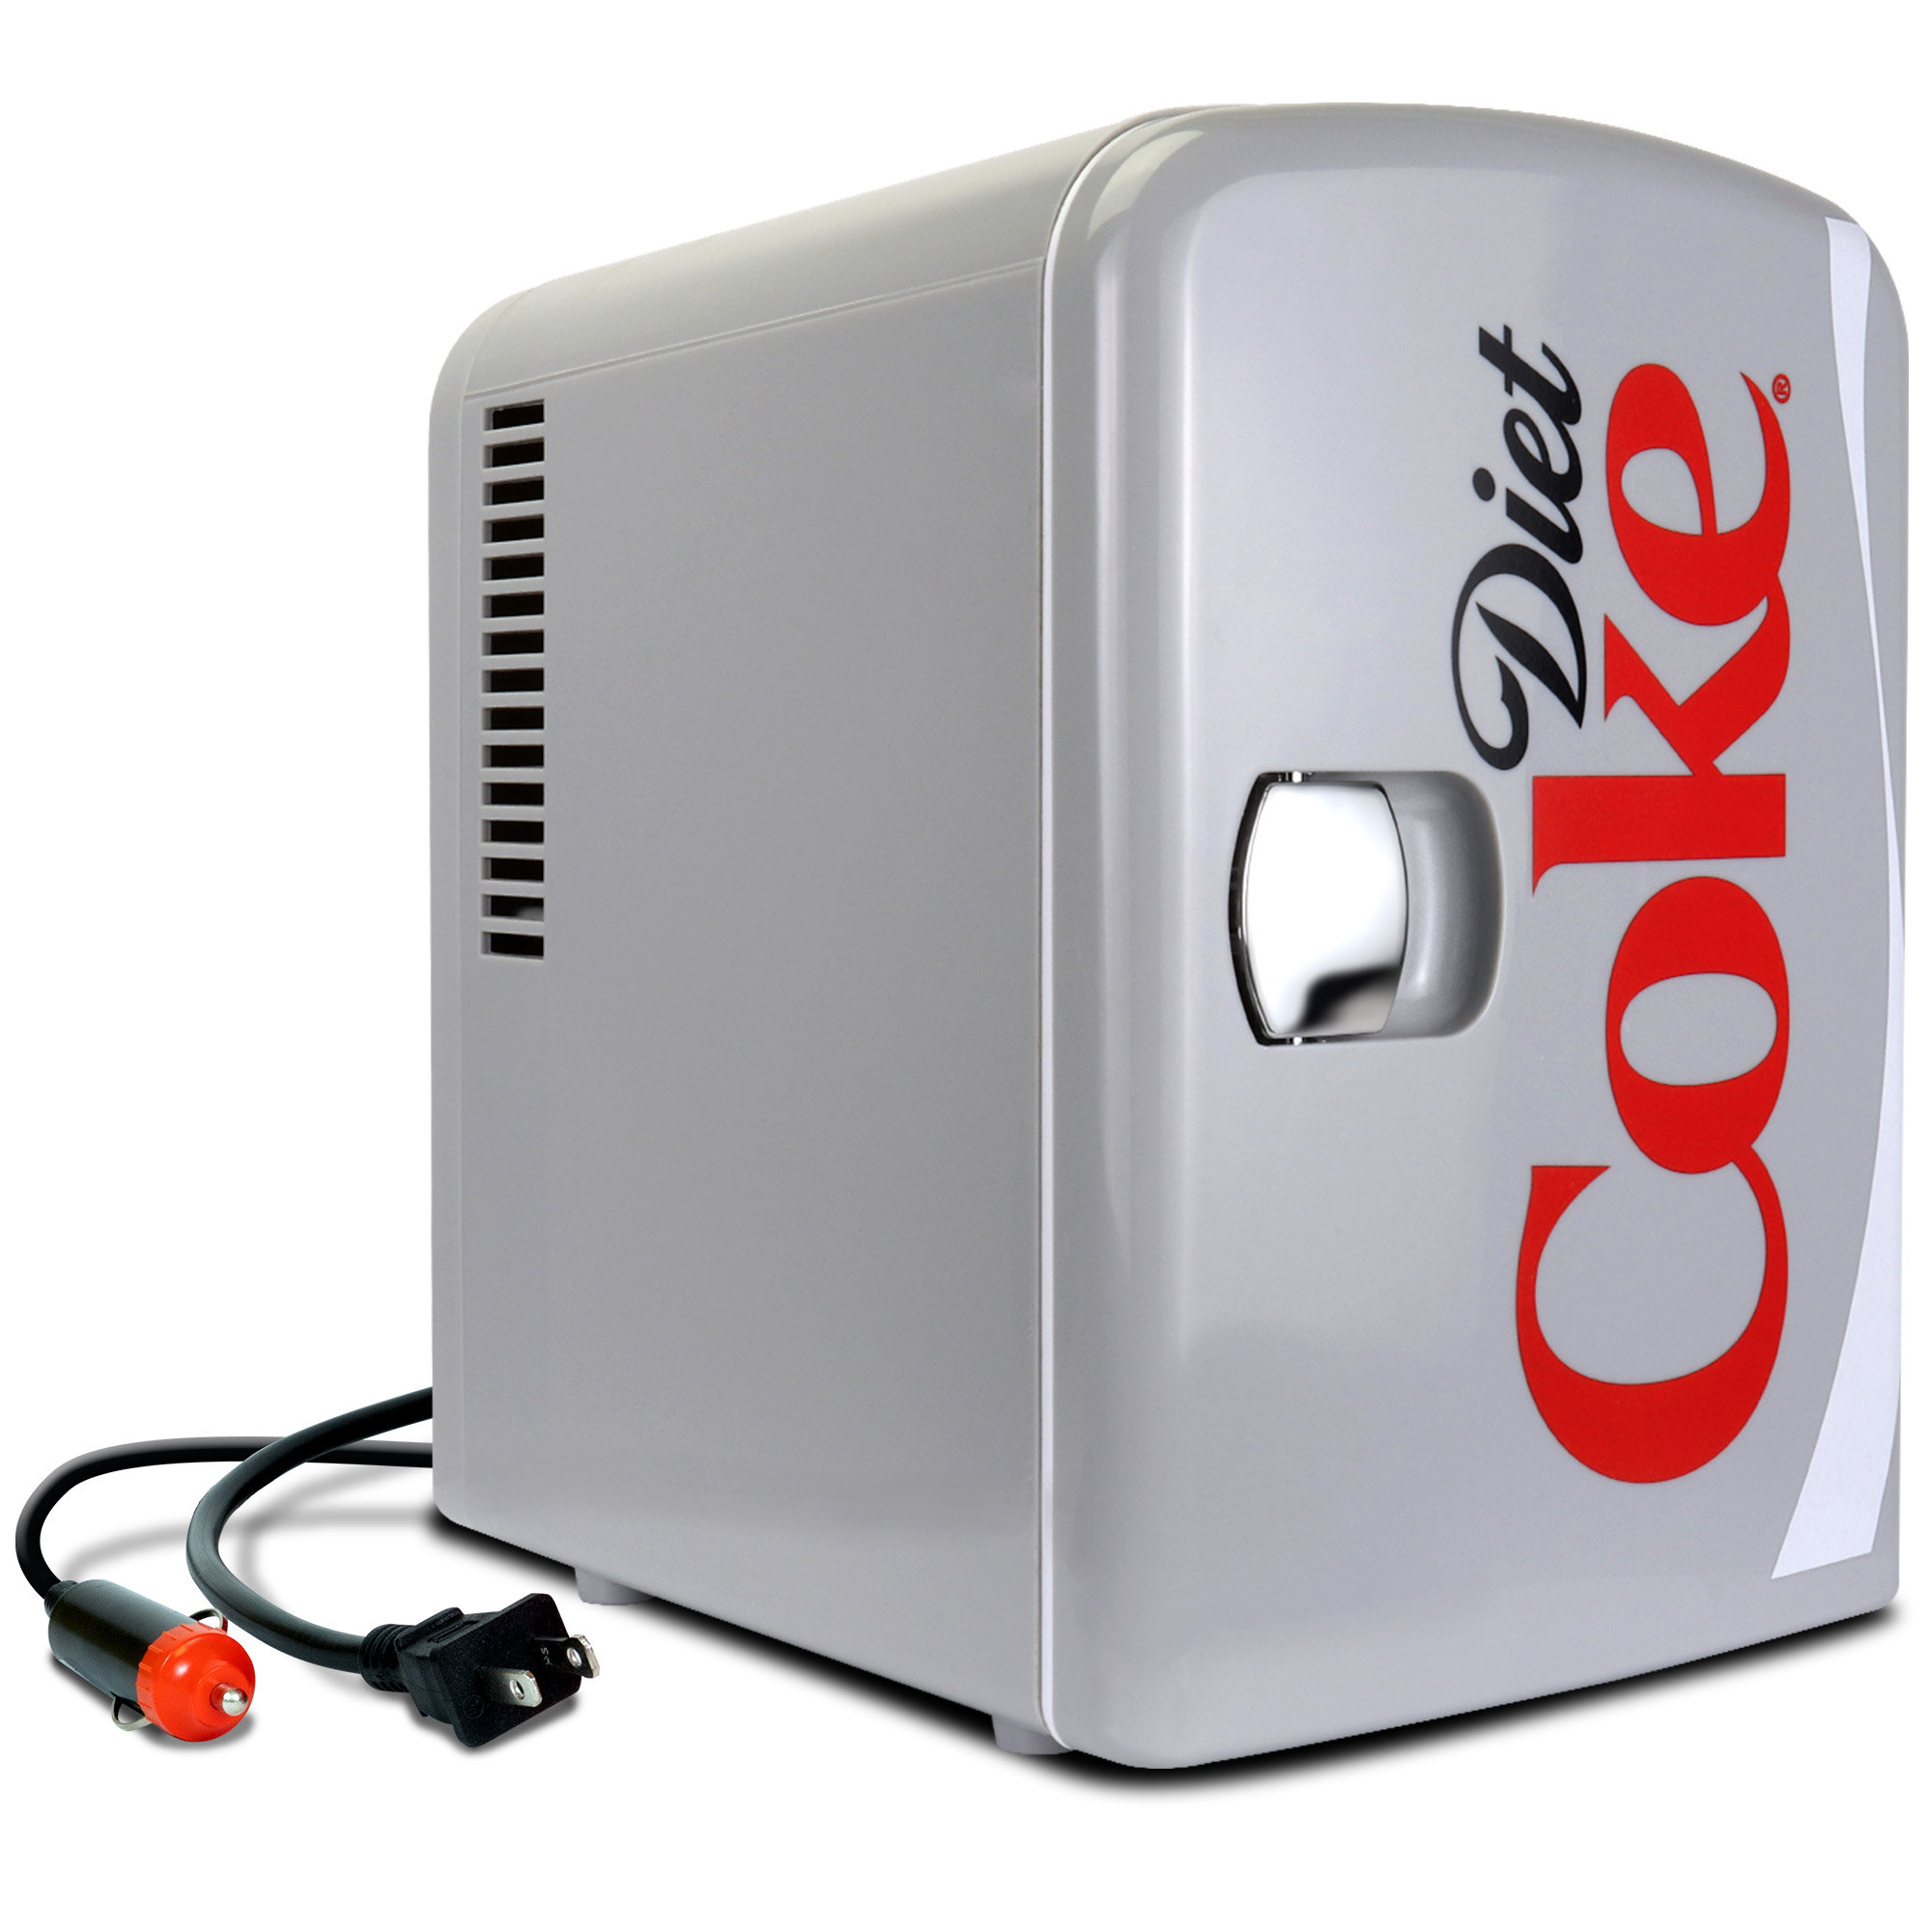 Coca-Cola Polar Bear 0.14-cu ft Standard-depth Freestanding Mini Fridge  (Red, White) in the Mini Fridges department at